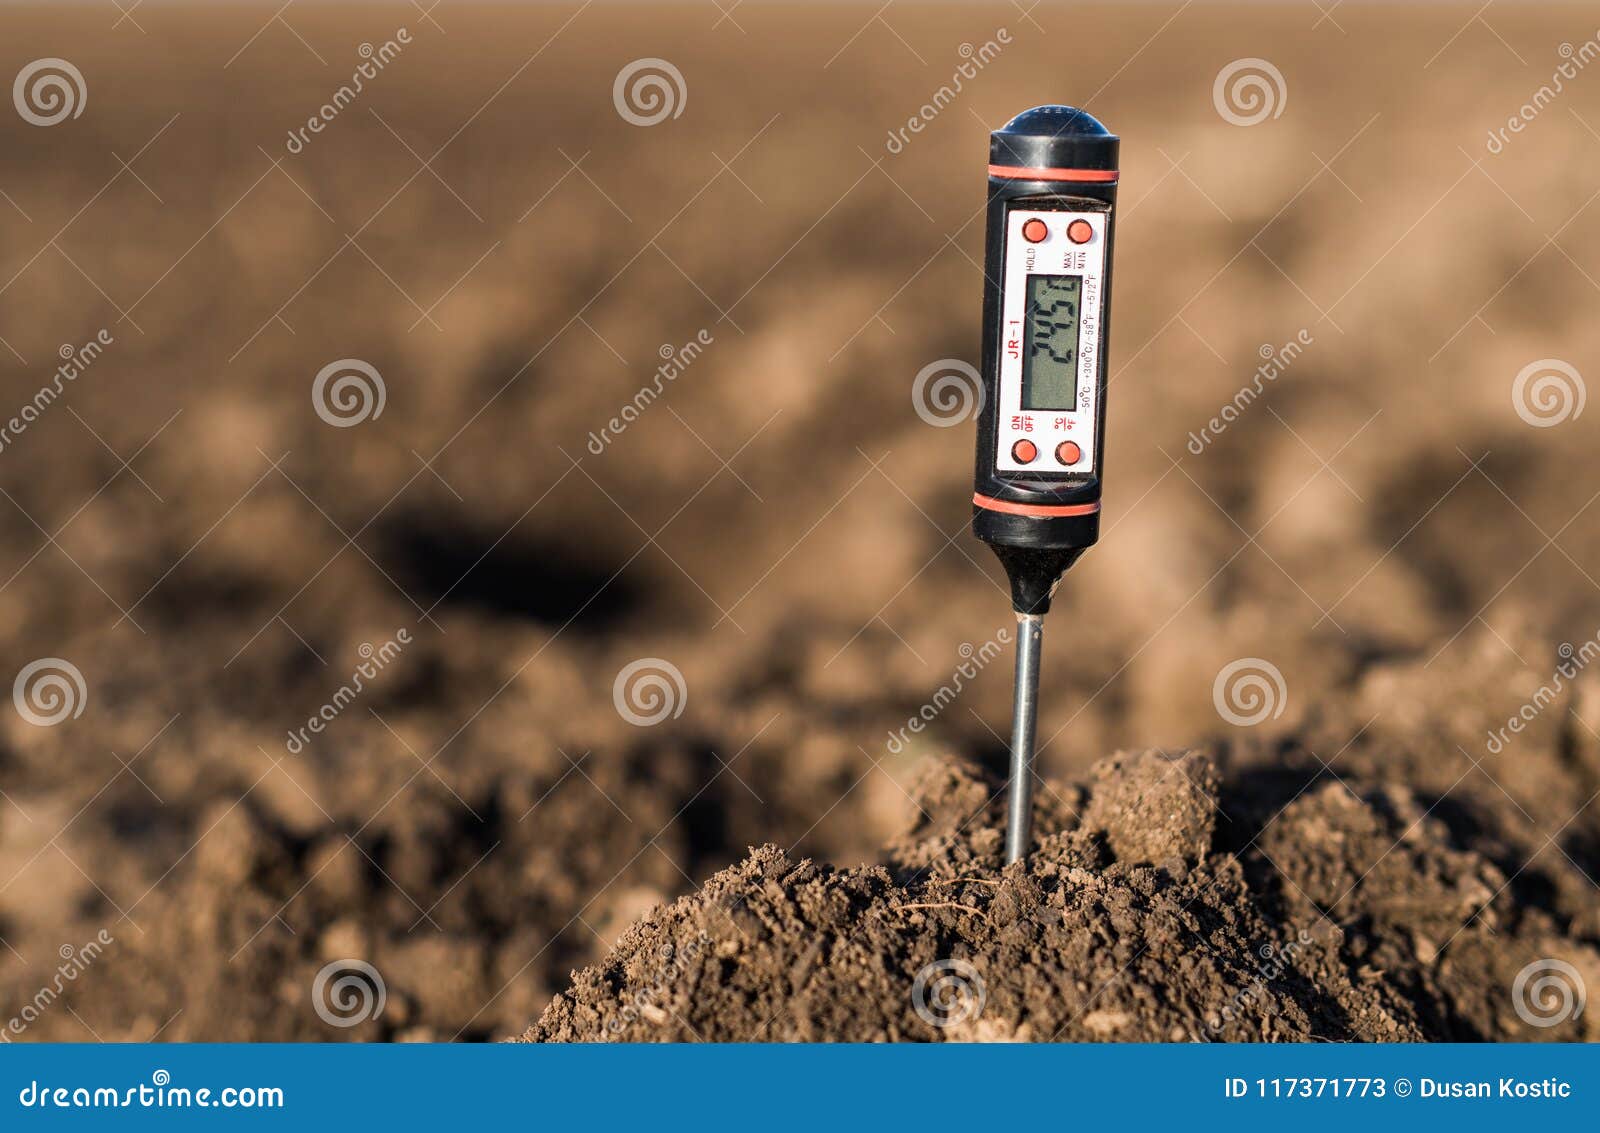 soil meter for measured ph, temperature and moisture